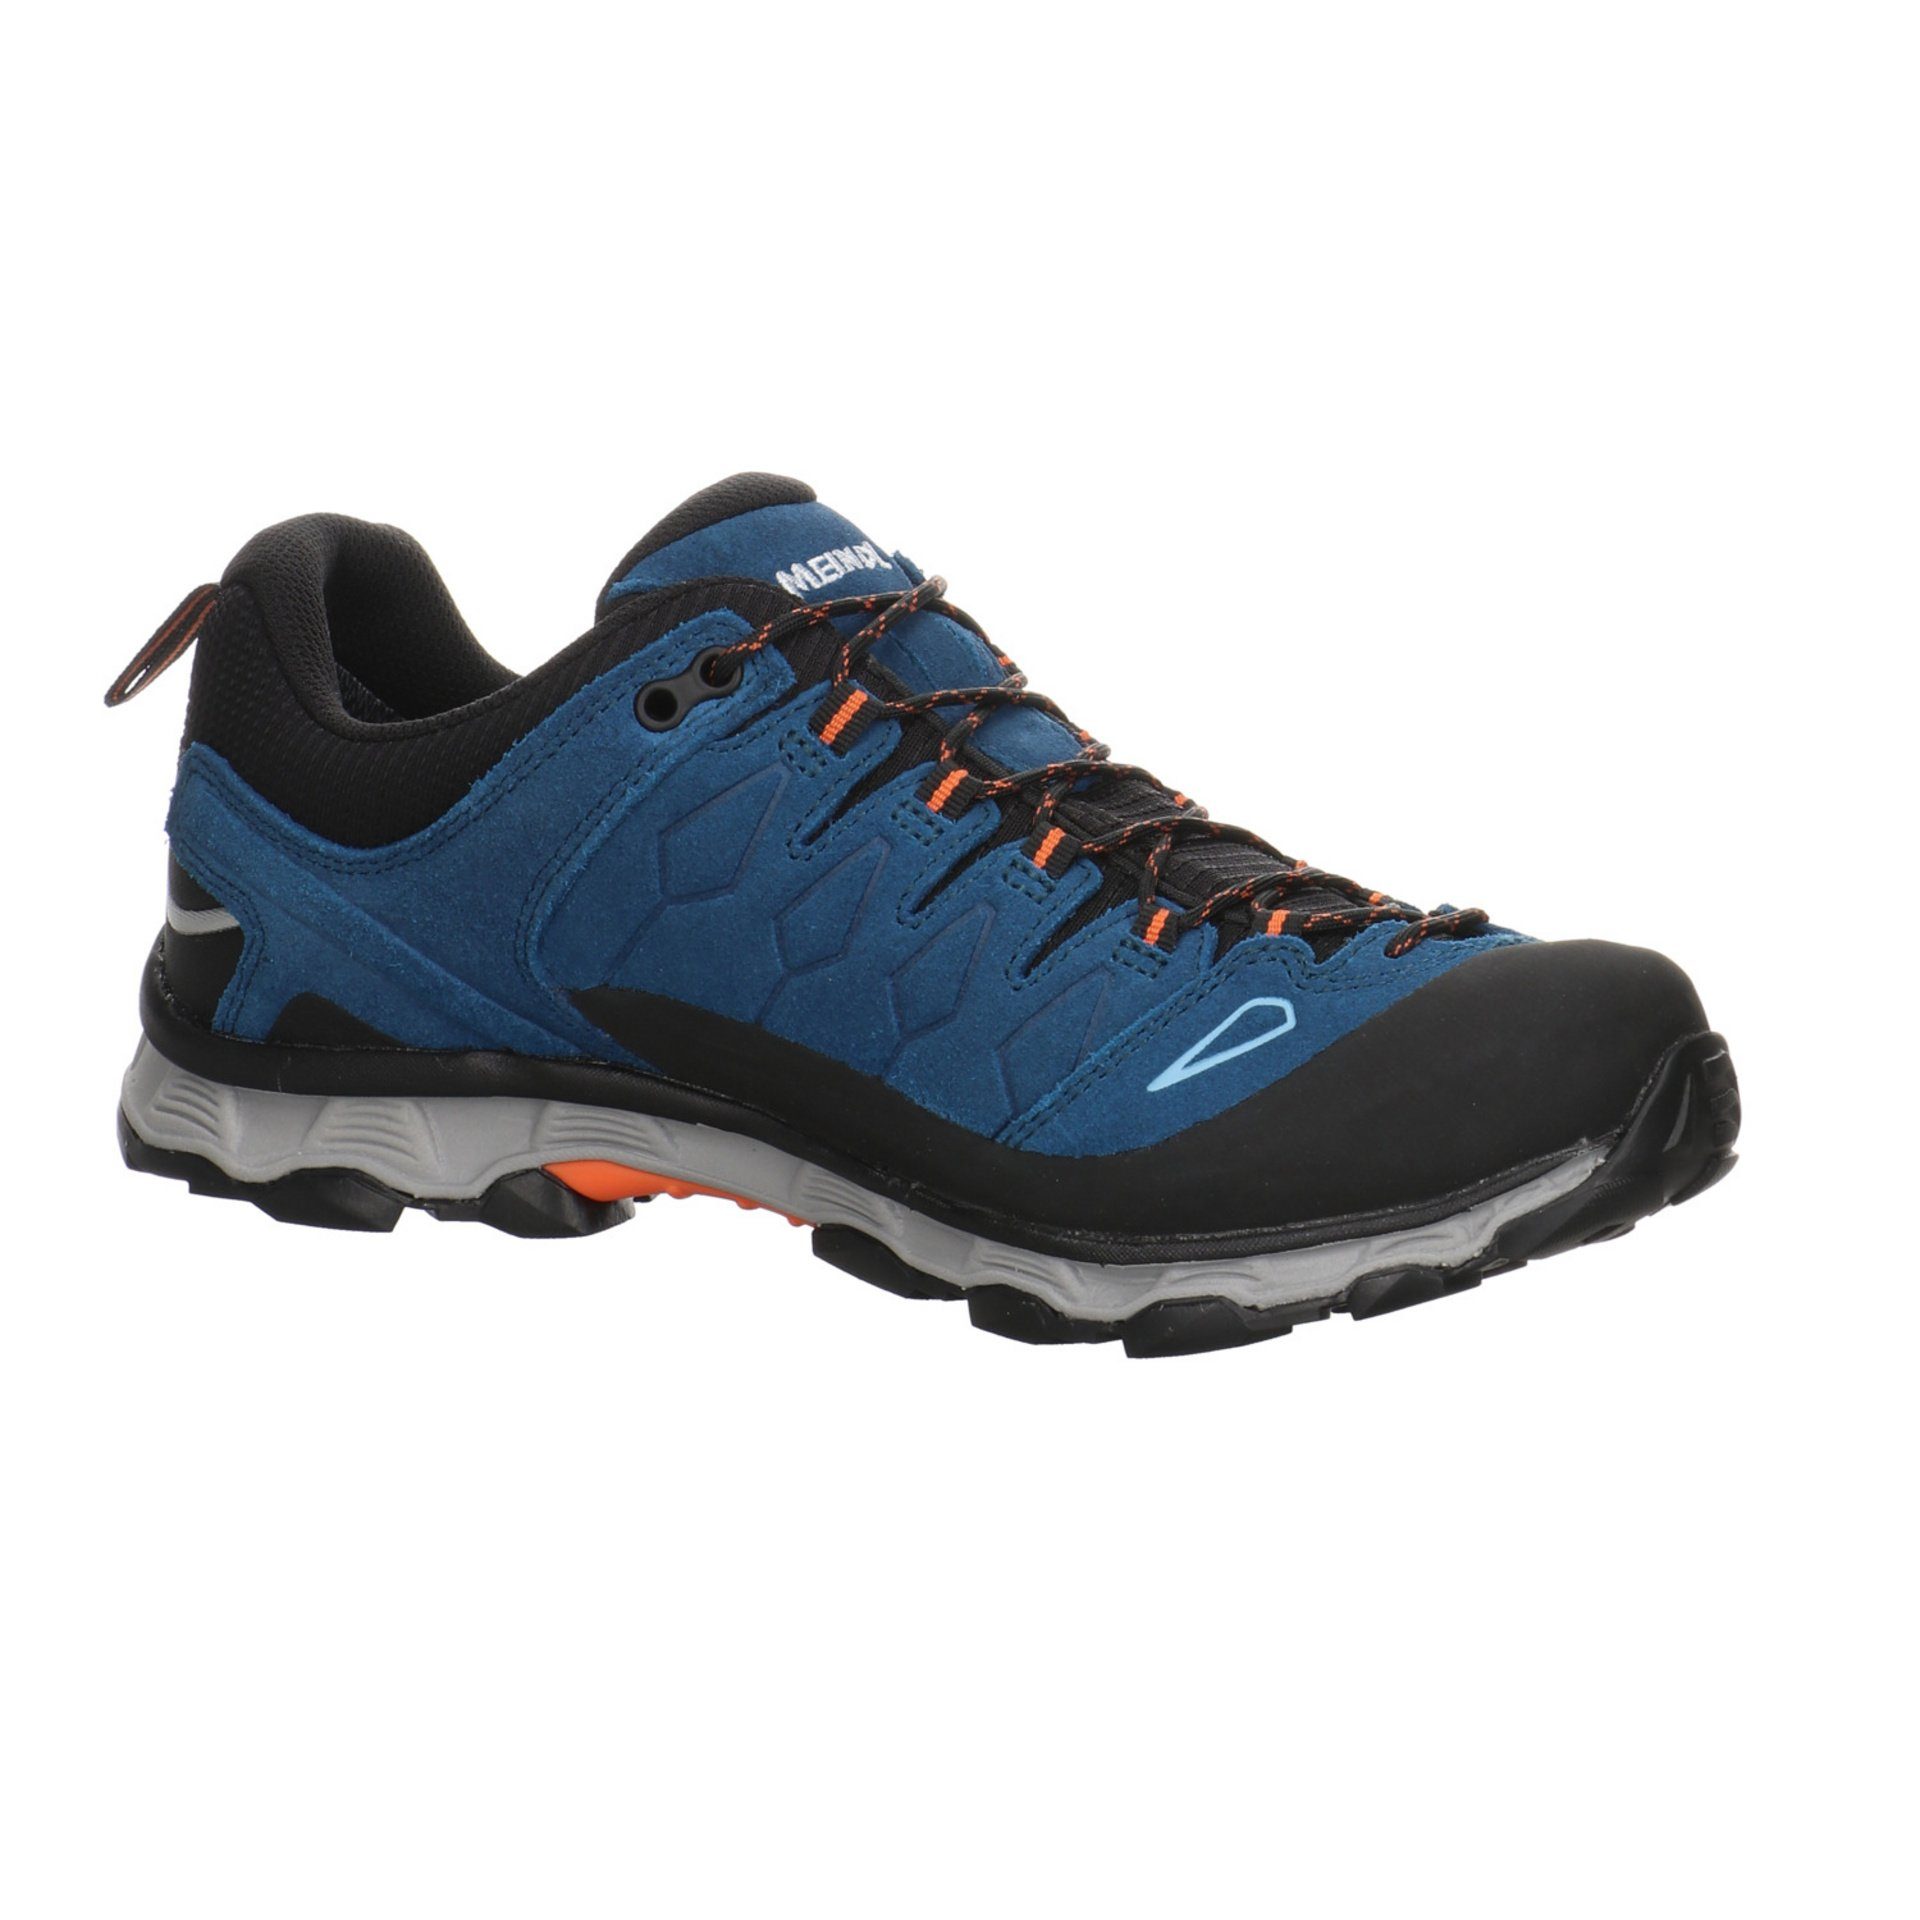 Meindl Herren Outdoor Schuhe Lite Outdoorschuh Outdoorschuh Trail Leder-/Textilkombination GTX blau/orange